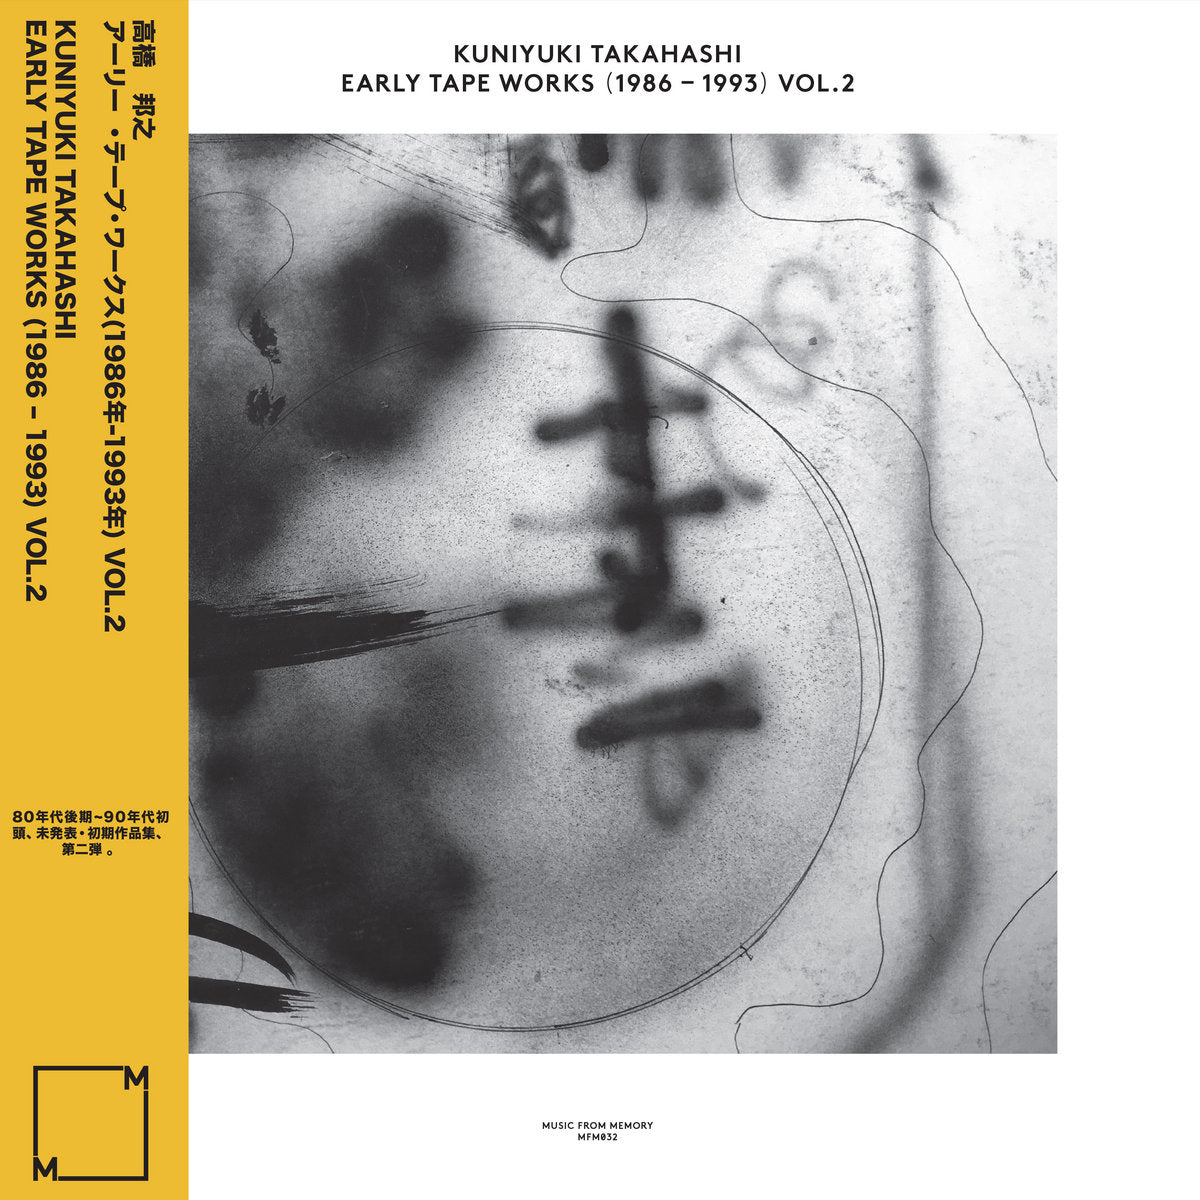 Takahashi, Kuniyuki "Early Tape Works (1986-1993) Vol. 2"